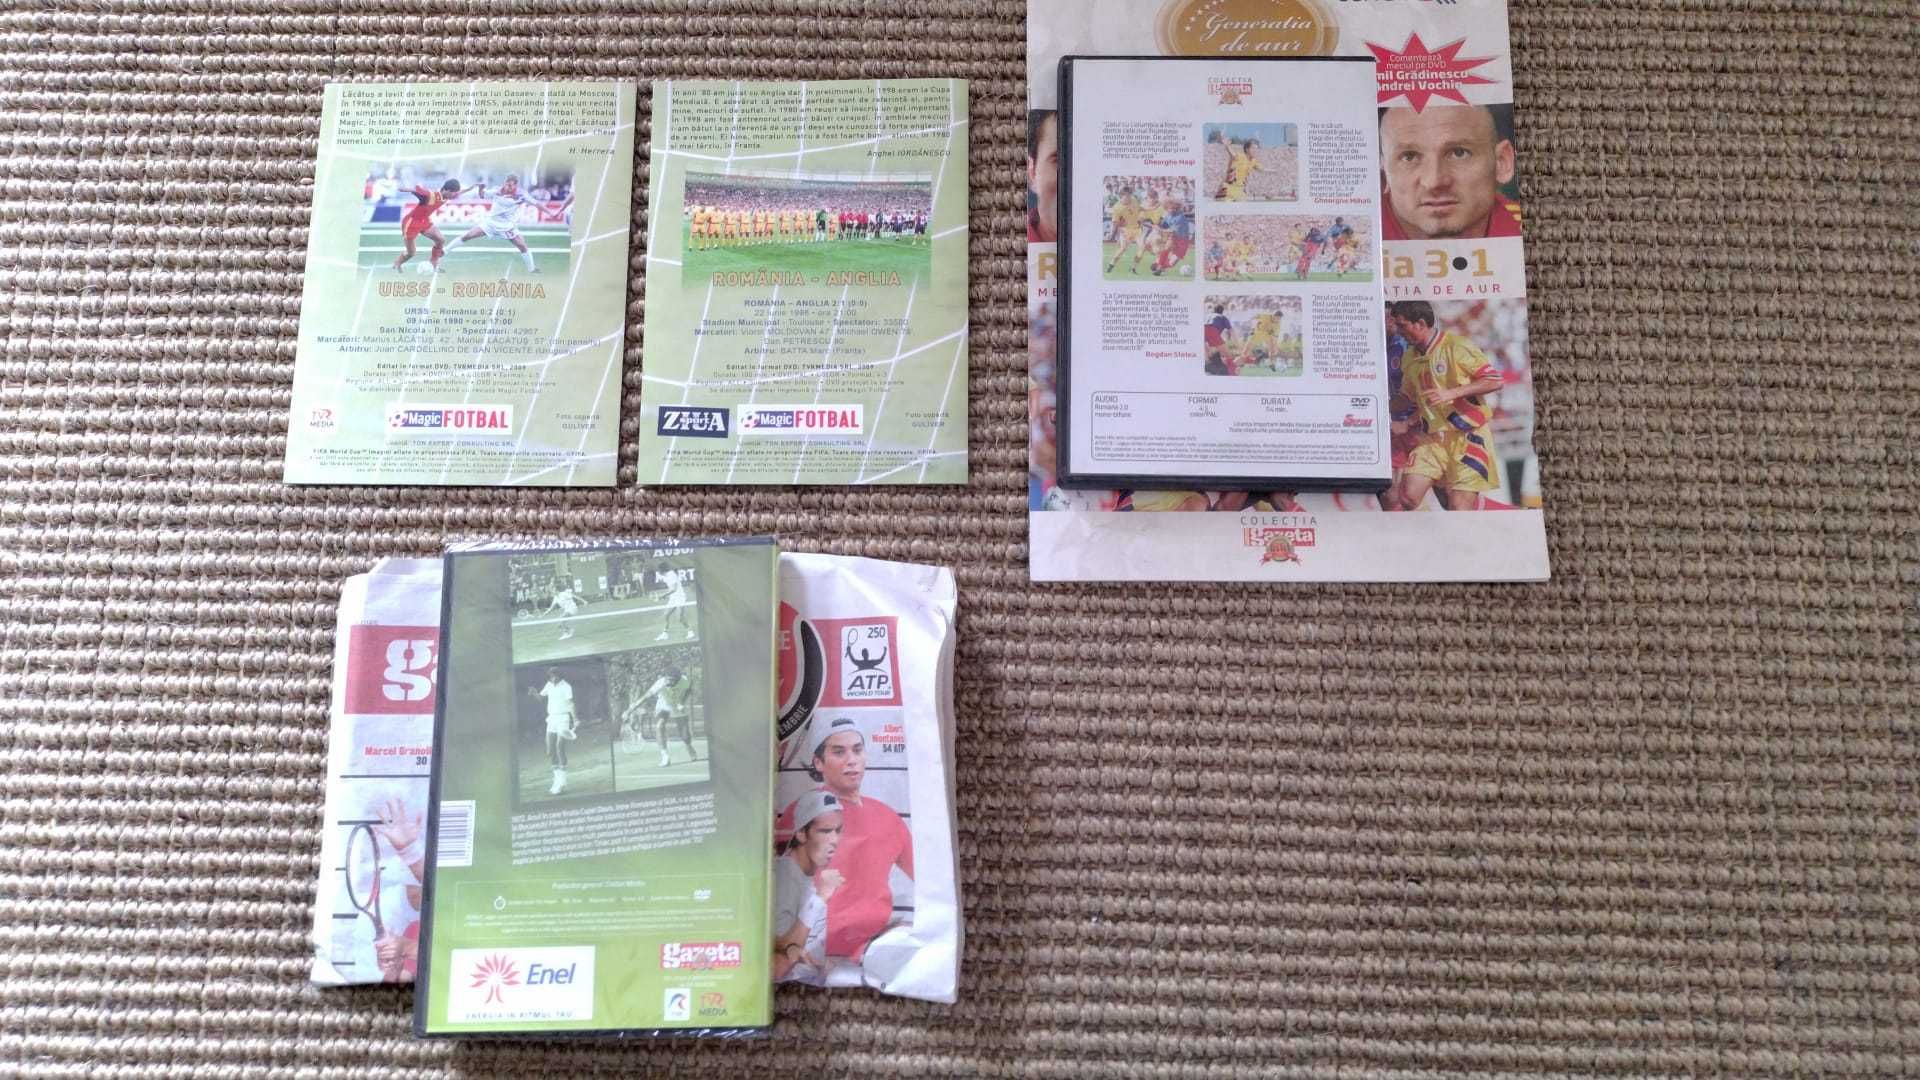 DVD-uri & VHS fotbal Romania, Dinamo / / tenis Nastase & Tiriac